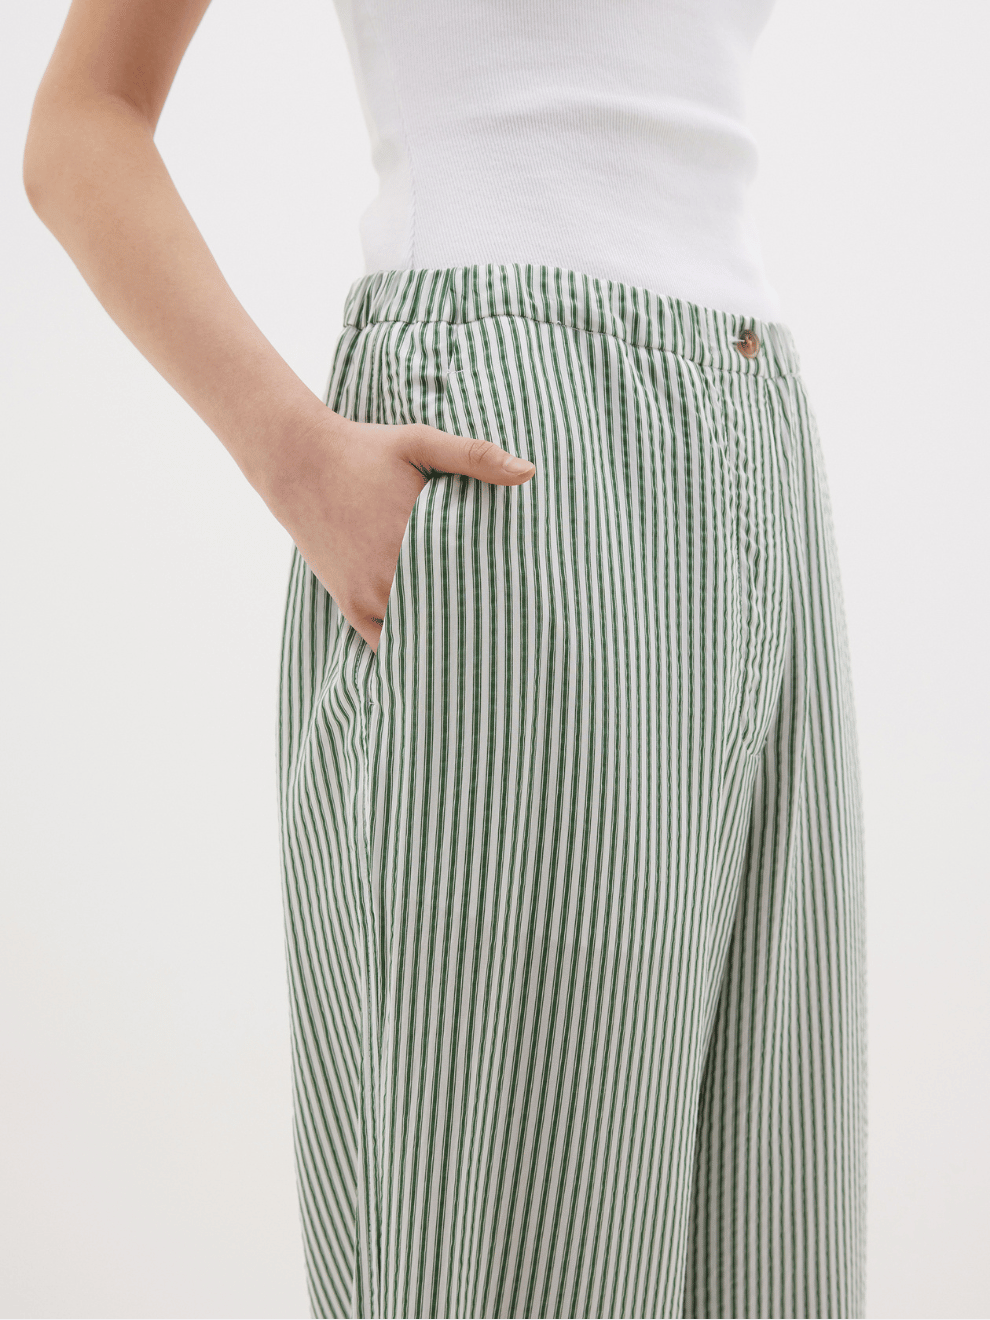 Stripe Summer Pant in Green/White